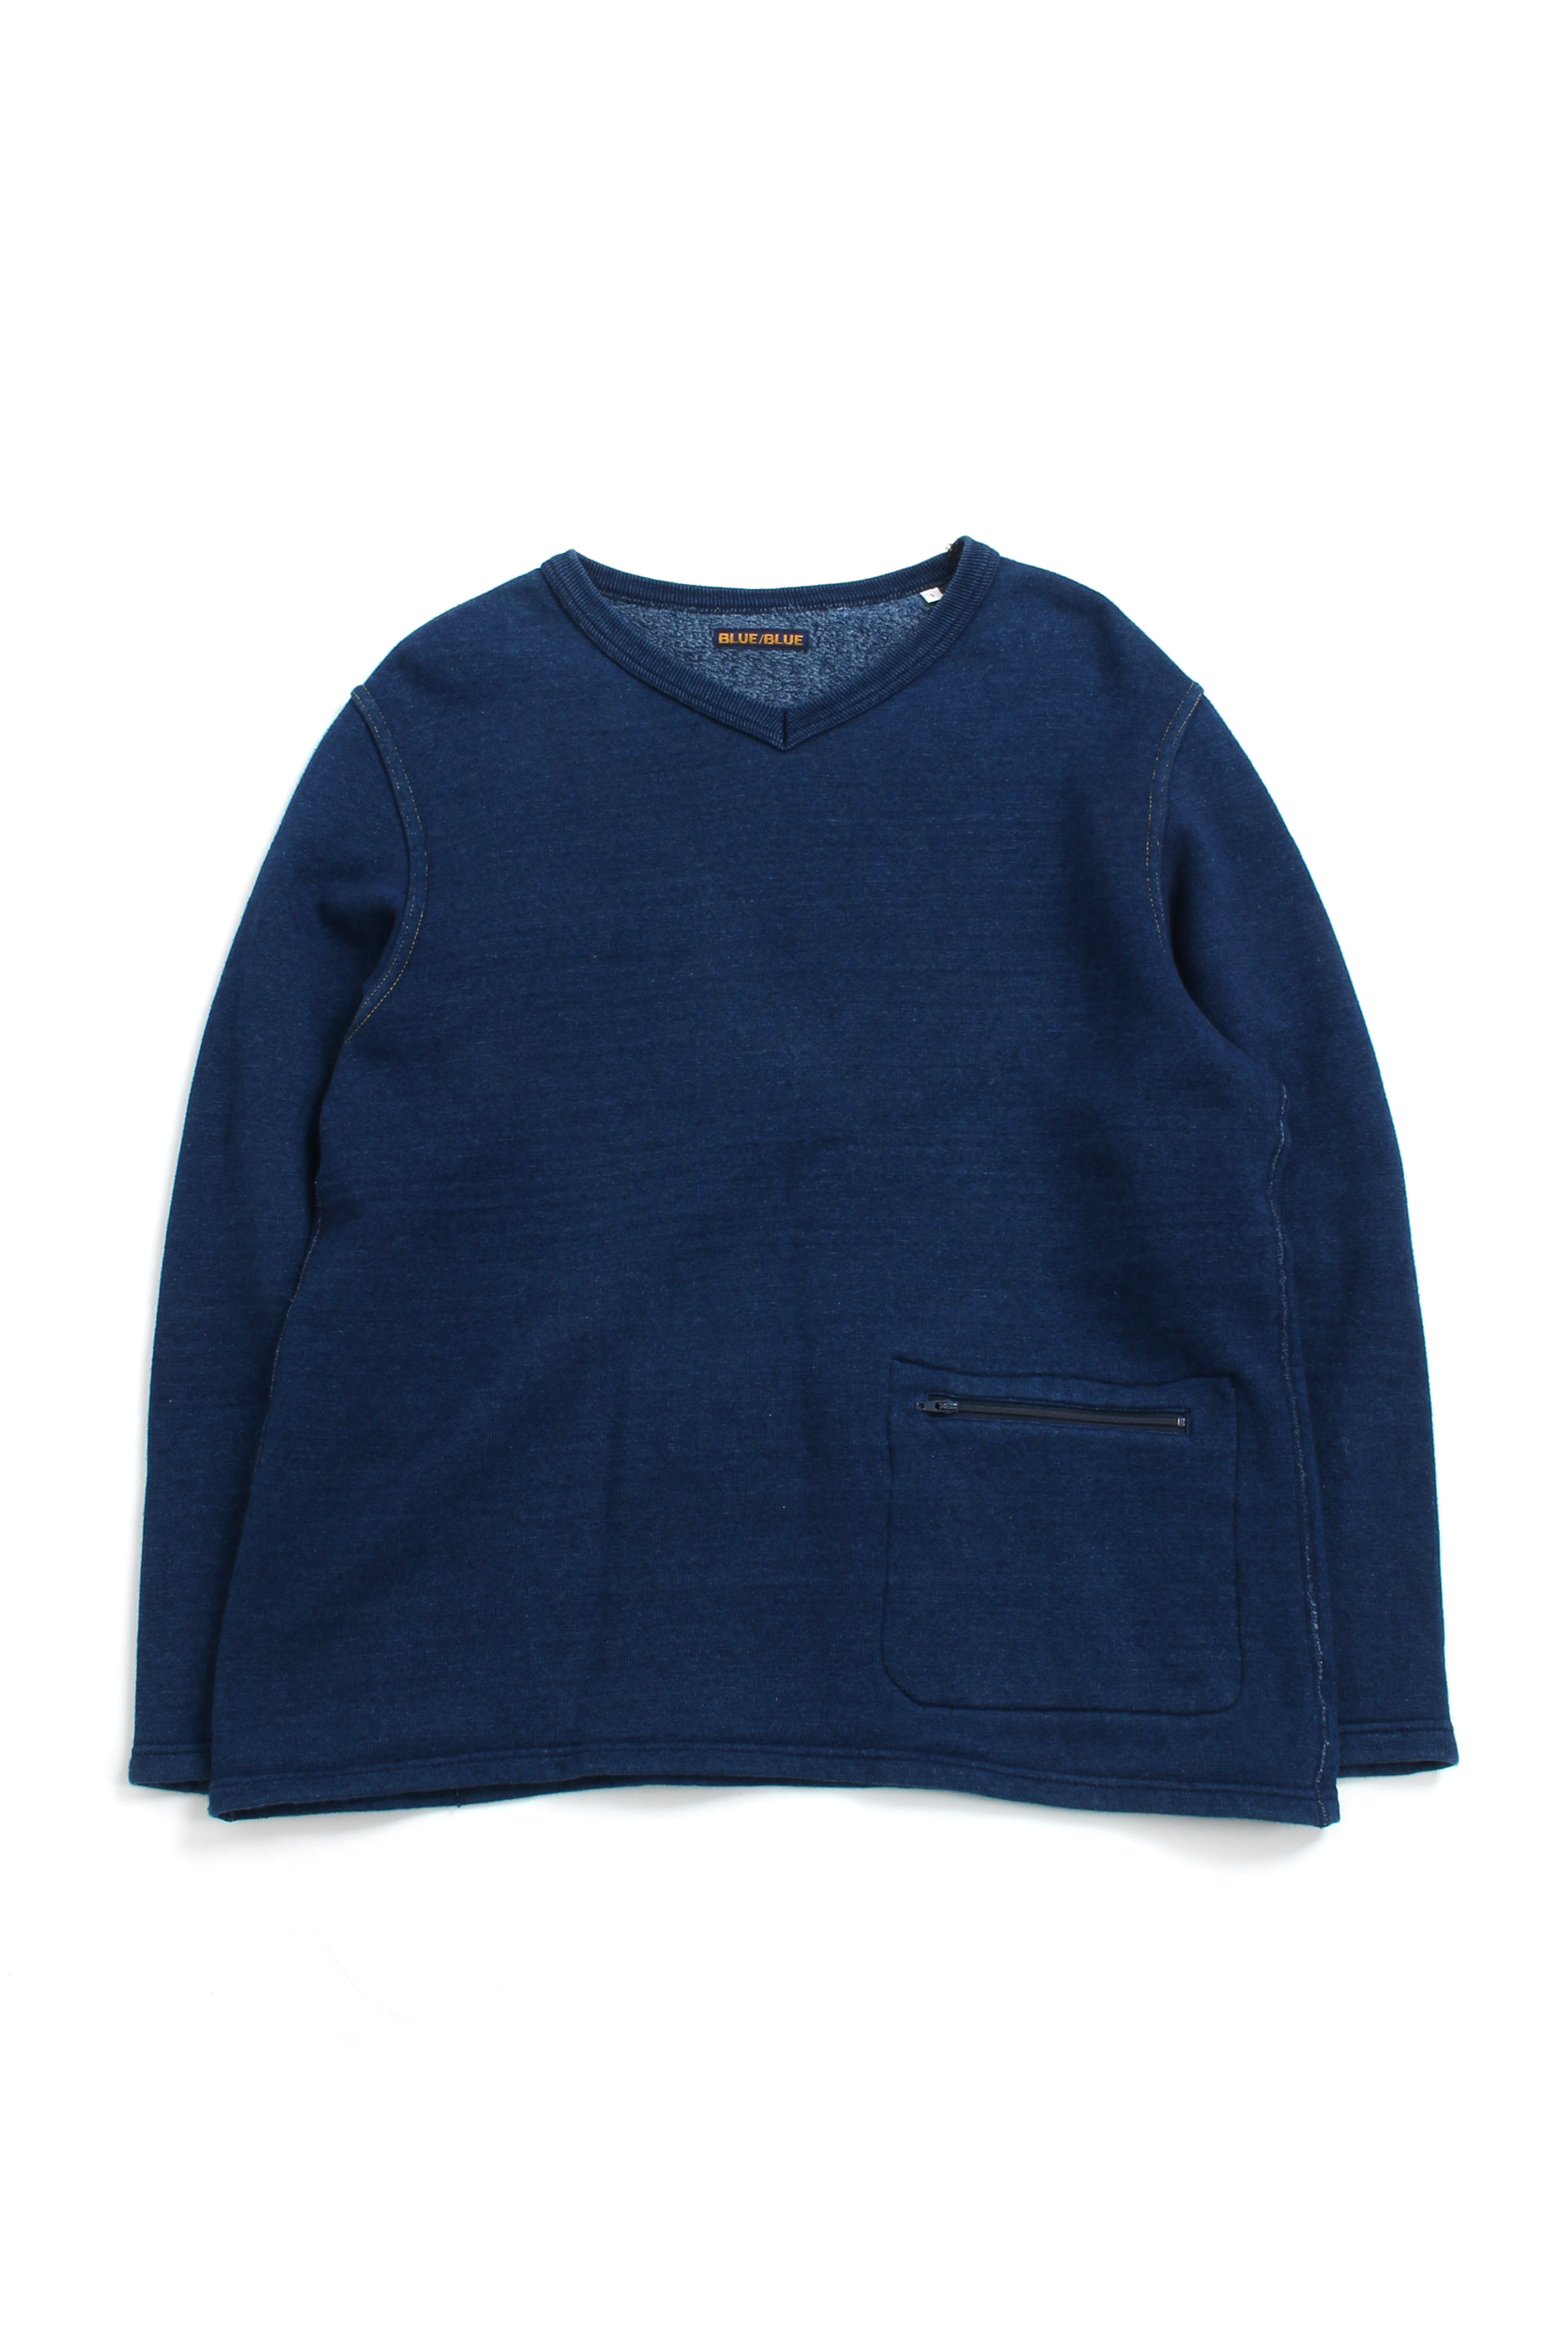 BLUE BLUE Indigo Sweater(1)